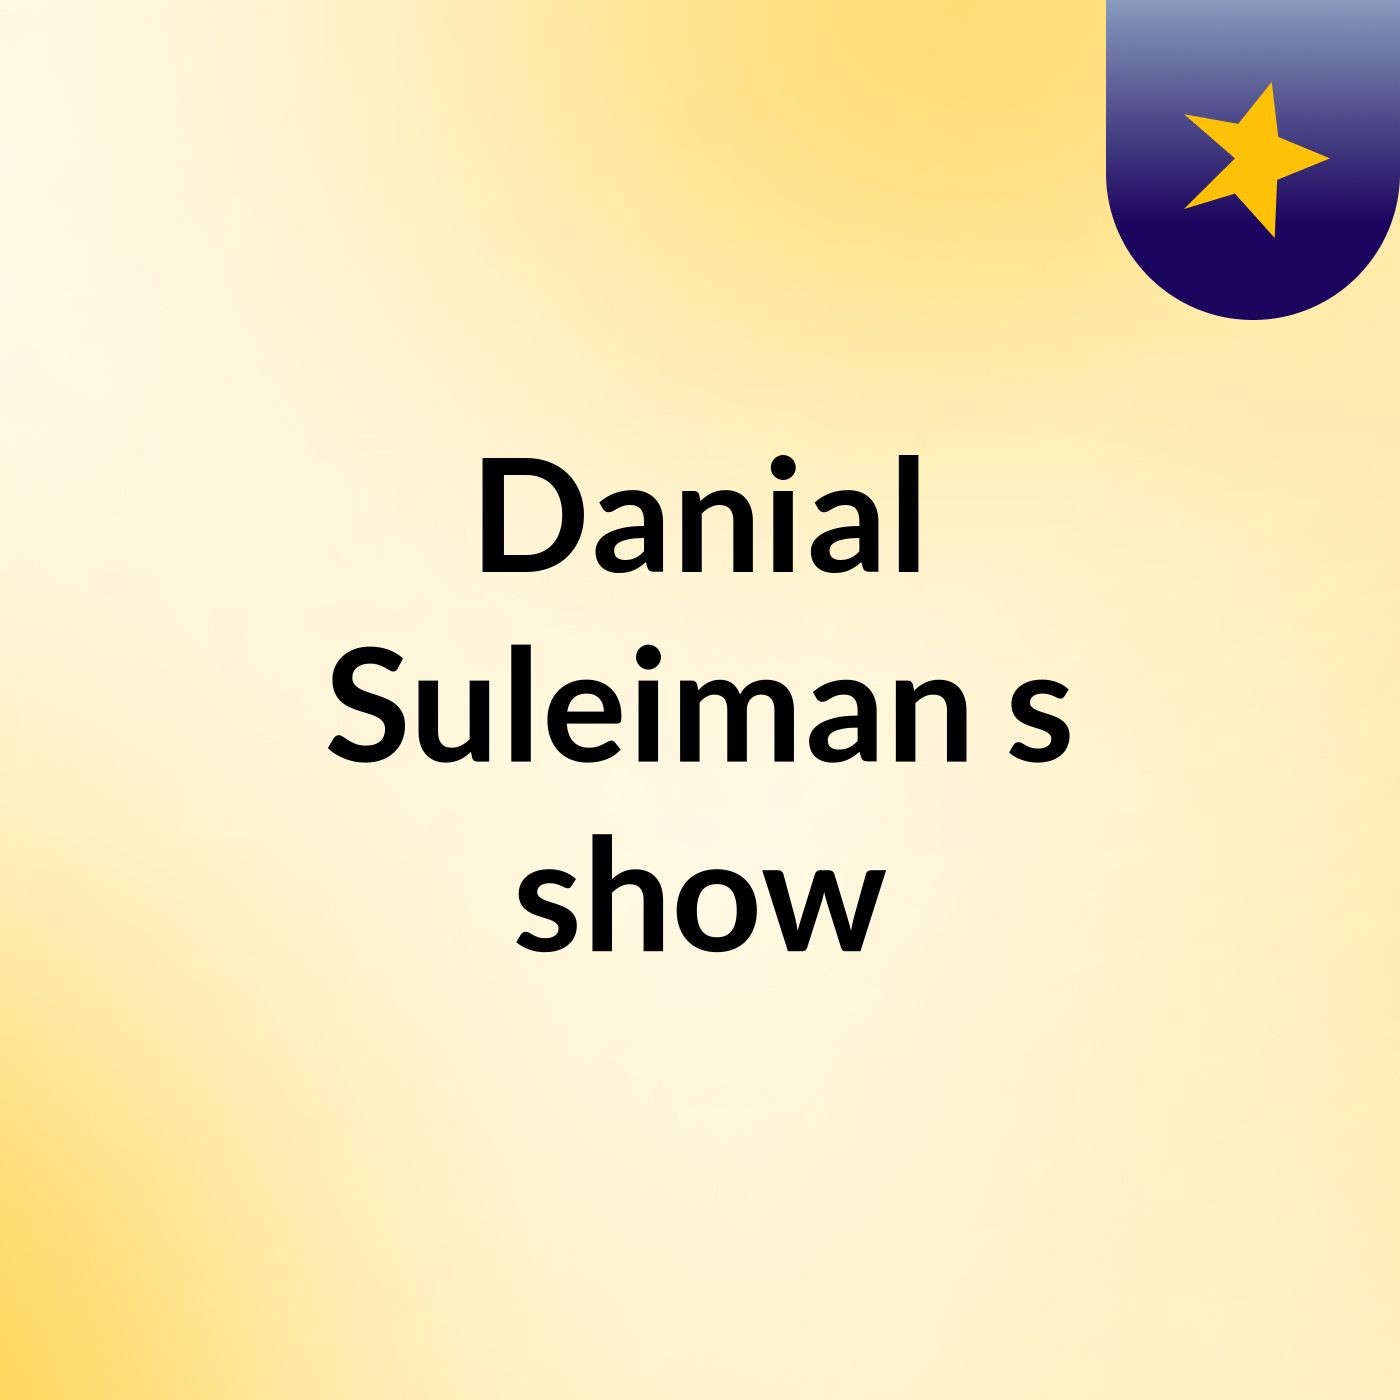 Danial Suleiman's show